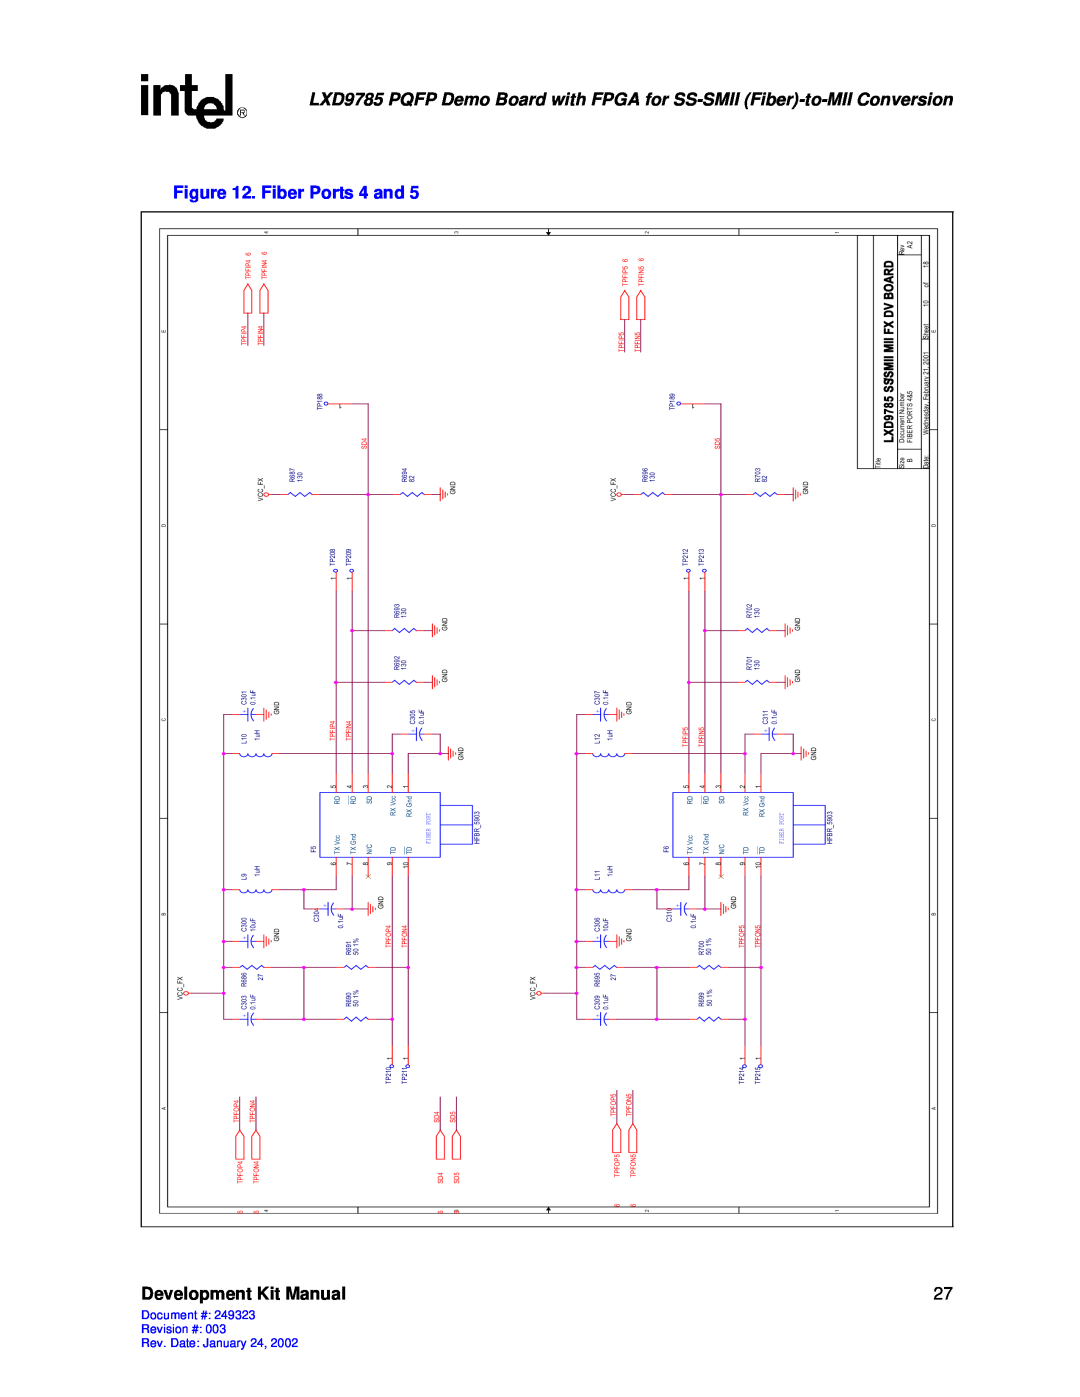 Intel Demo Board with FPGA for SS-SMII (Fiber)-to-MII Conversion Fiber Ports 4 and, Development Kit Manual, LXD9785 PQFP 